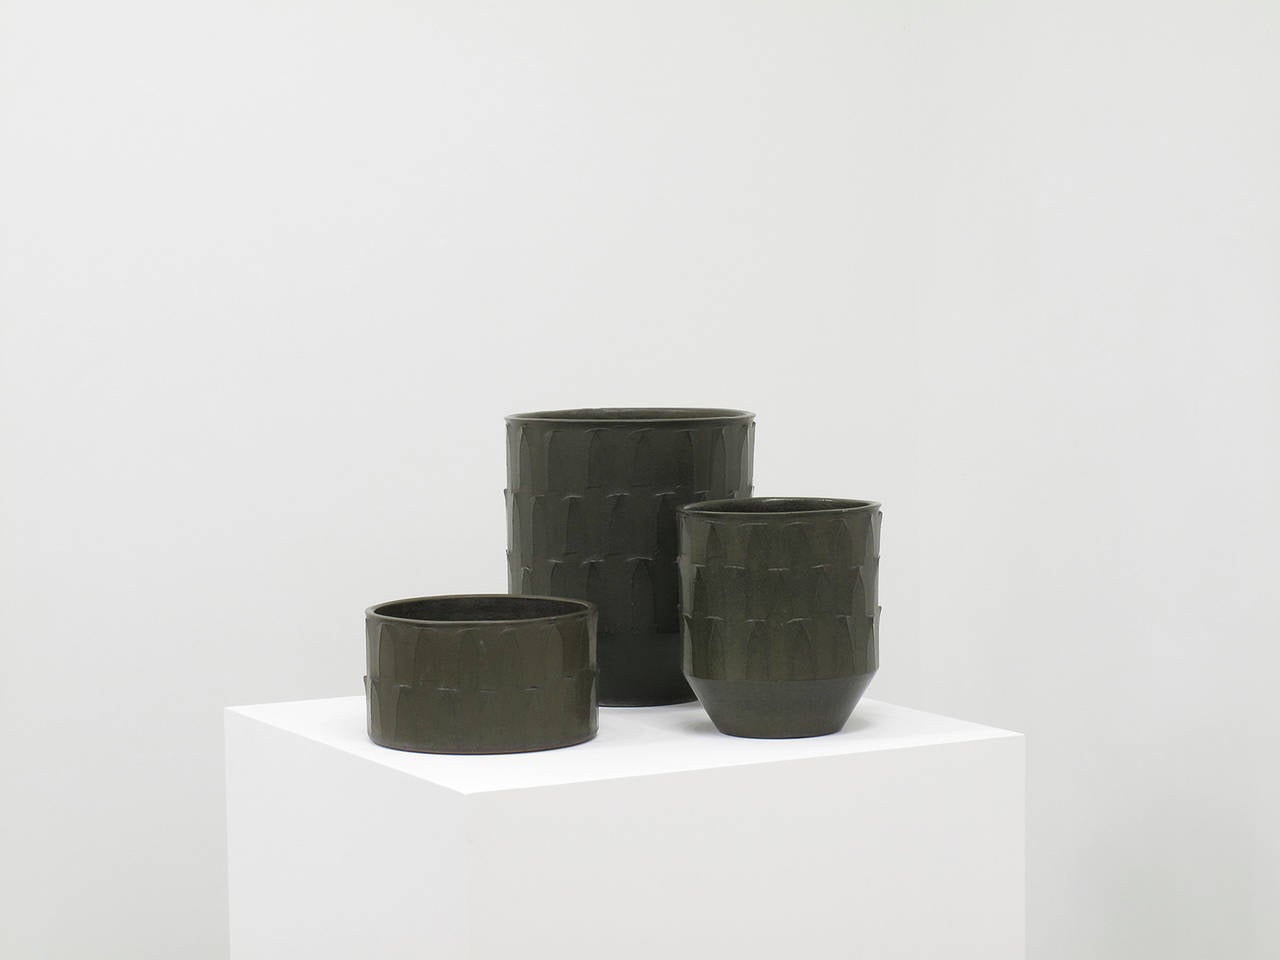 Stoneware David Cressey Ceramic Planters, 'Ribbed' Design, 1960s